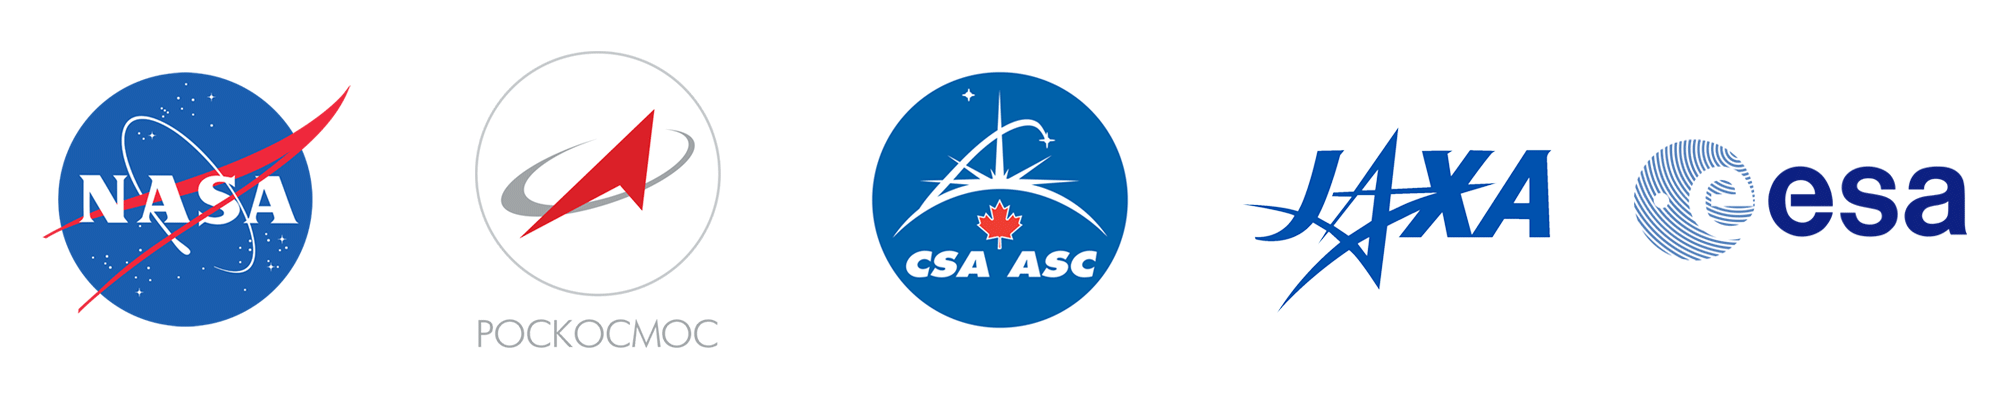 Space Agency Logo - International Cooperation | NASA